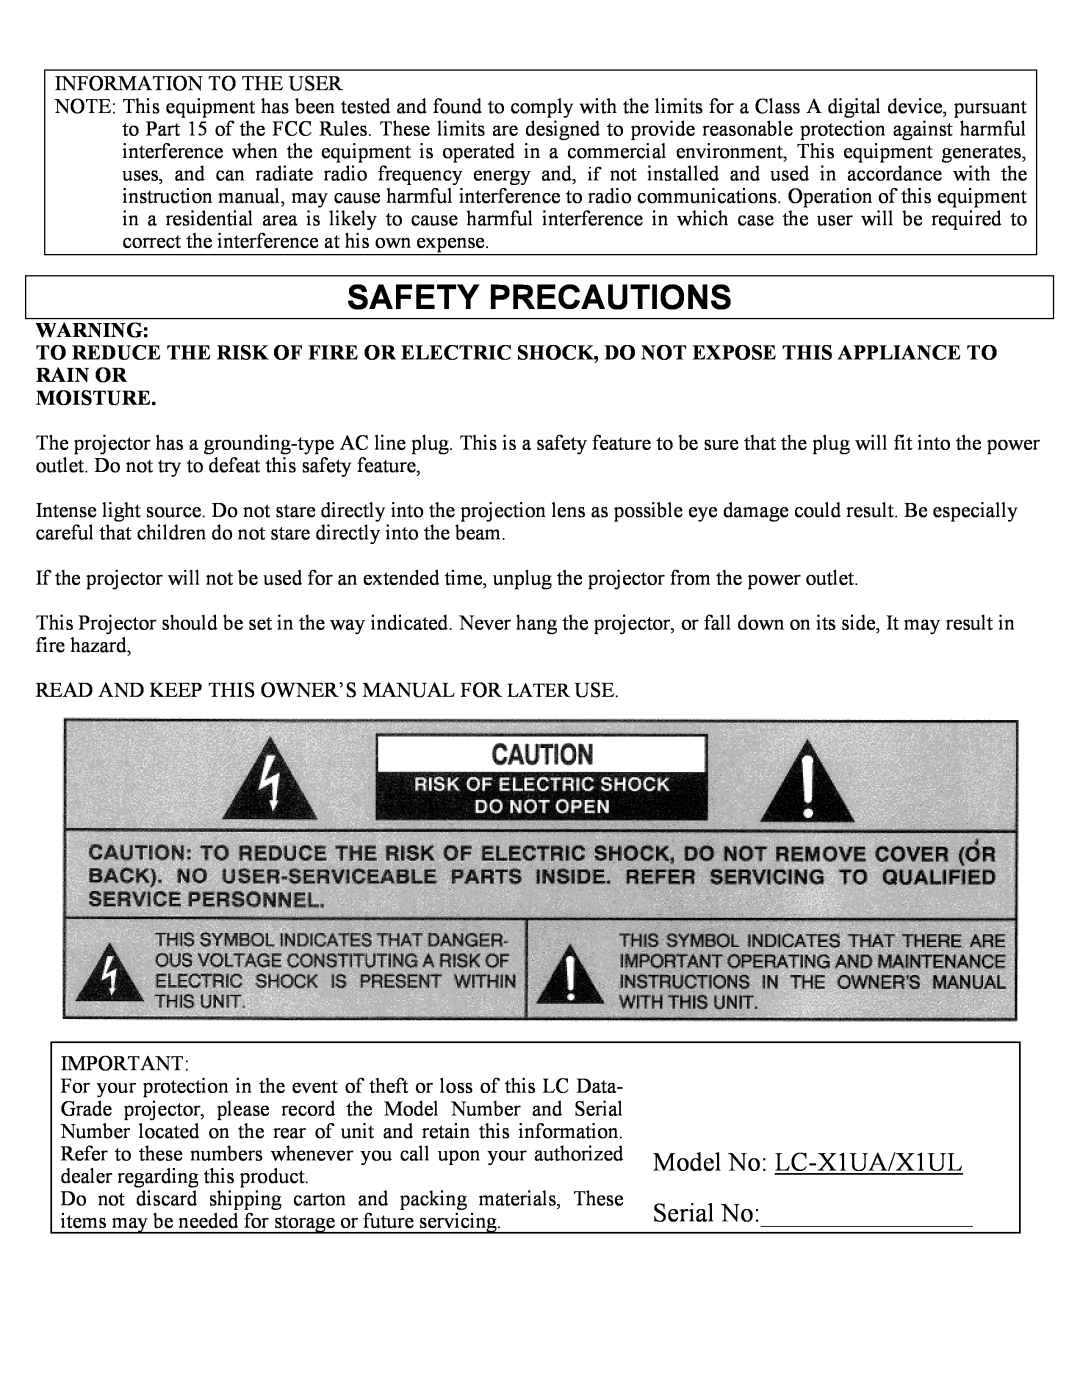 Eiki LC-X1UL instruction manual Safety Precautions, Model No: LC-X1UA/X1UL Serial No:________________ 